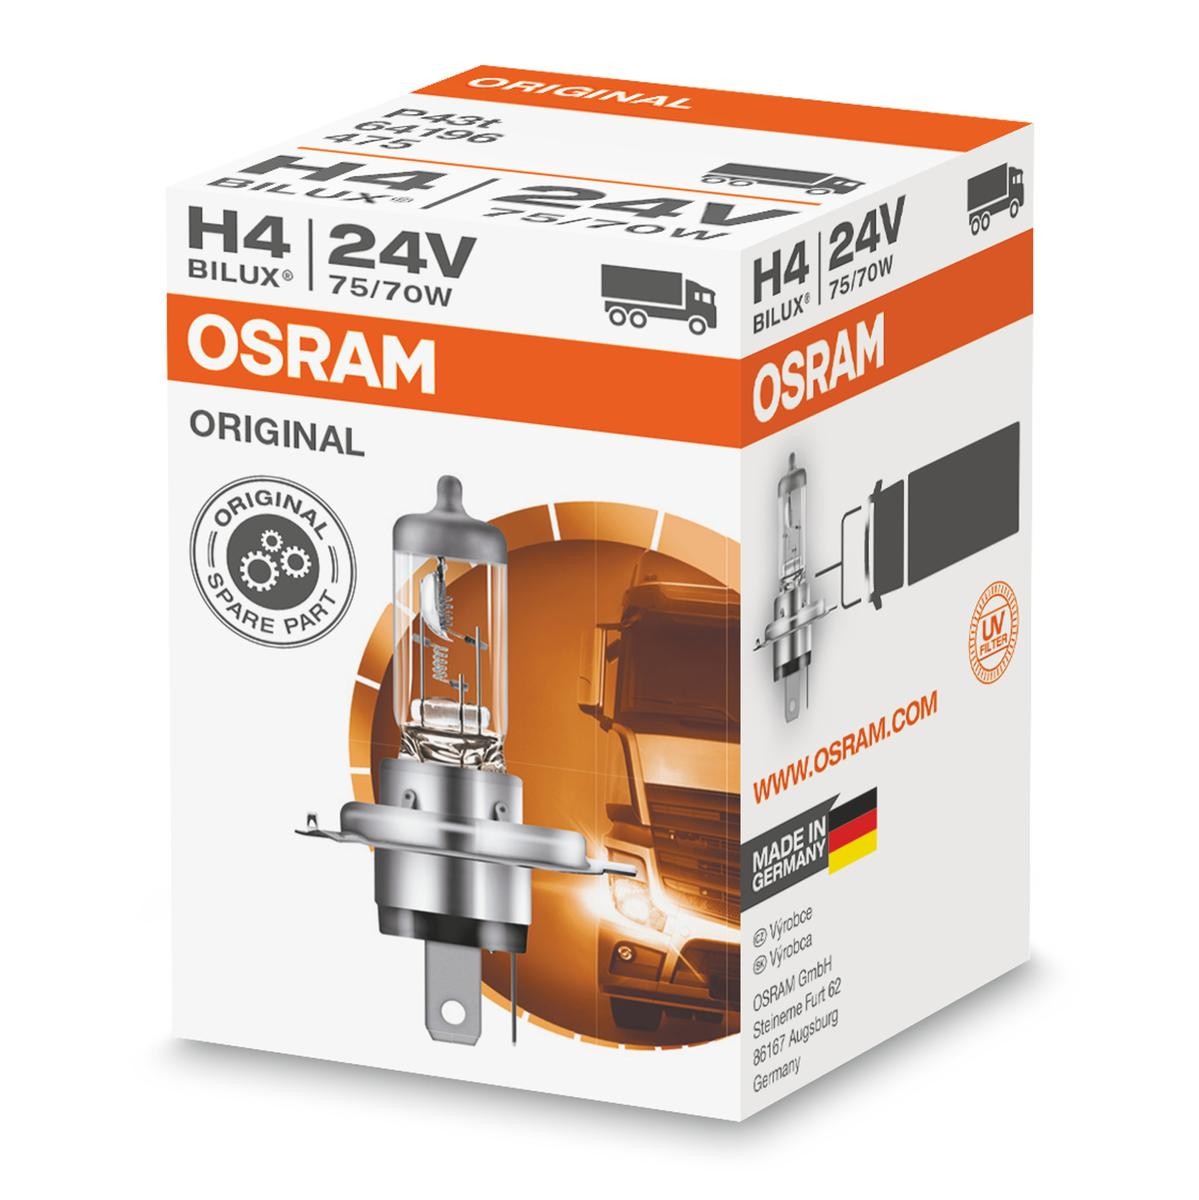 H4 OSRAM ORIGINAL LINE H4 24V 75/70W P43t, 3200K, Halogen High beam bulb 64196 buy